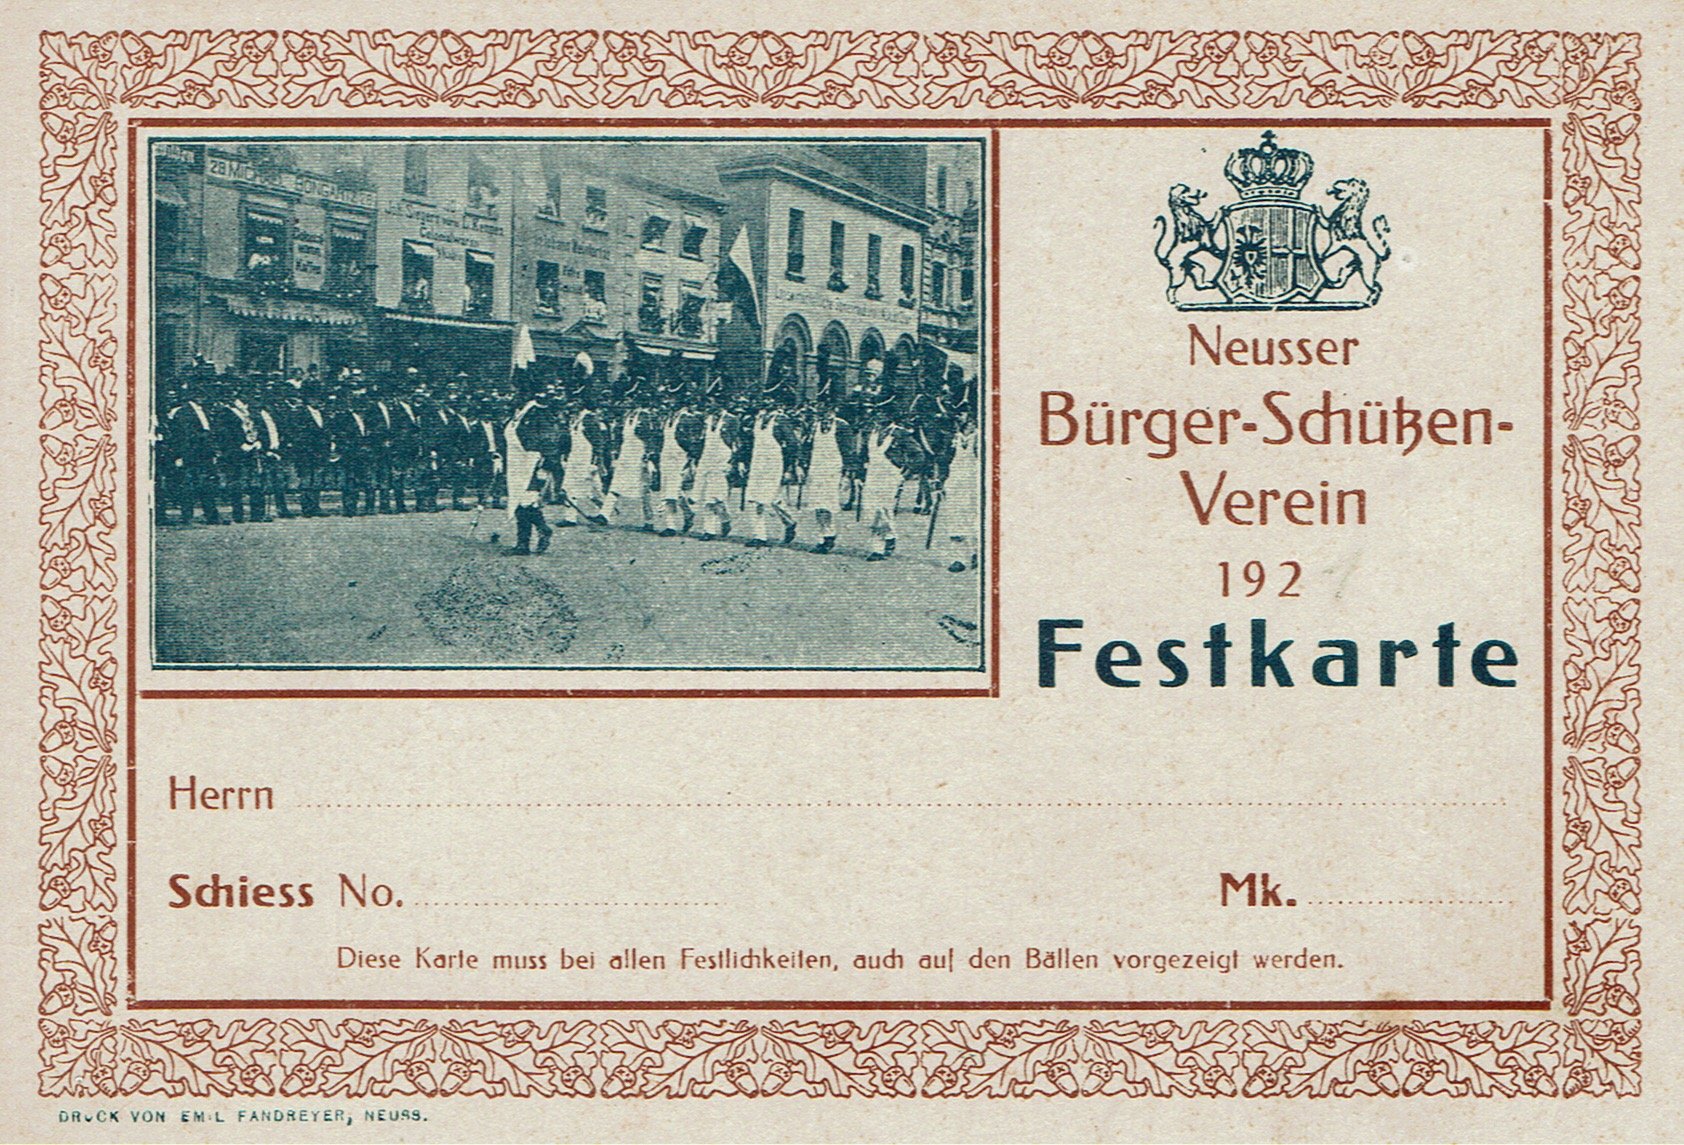 Festkarte Neuss 1921 (Rheinisches Schützenmuseum Neuss CC BY-NC-SA)